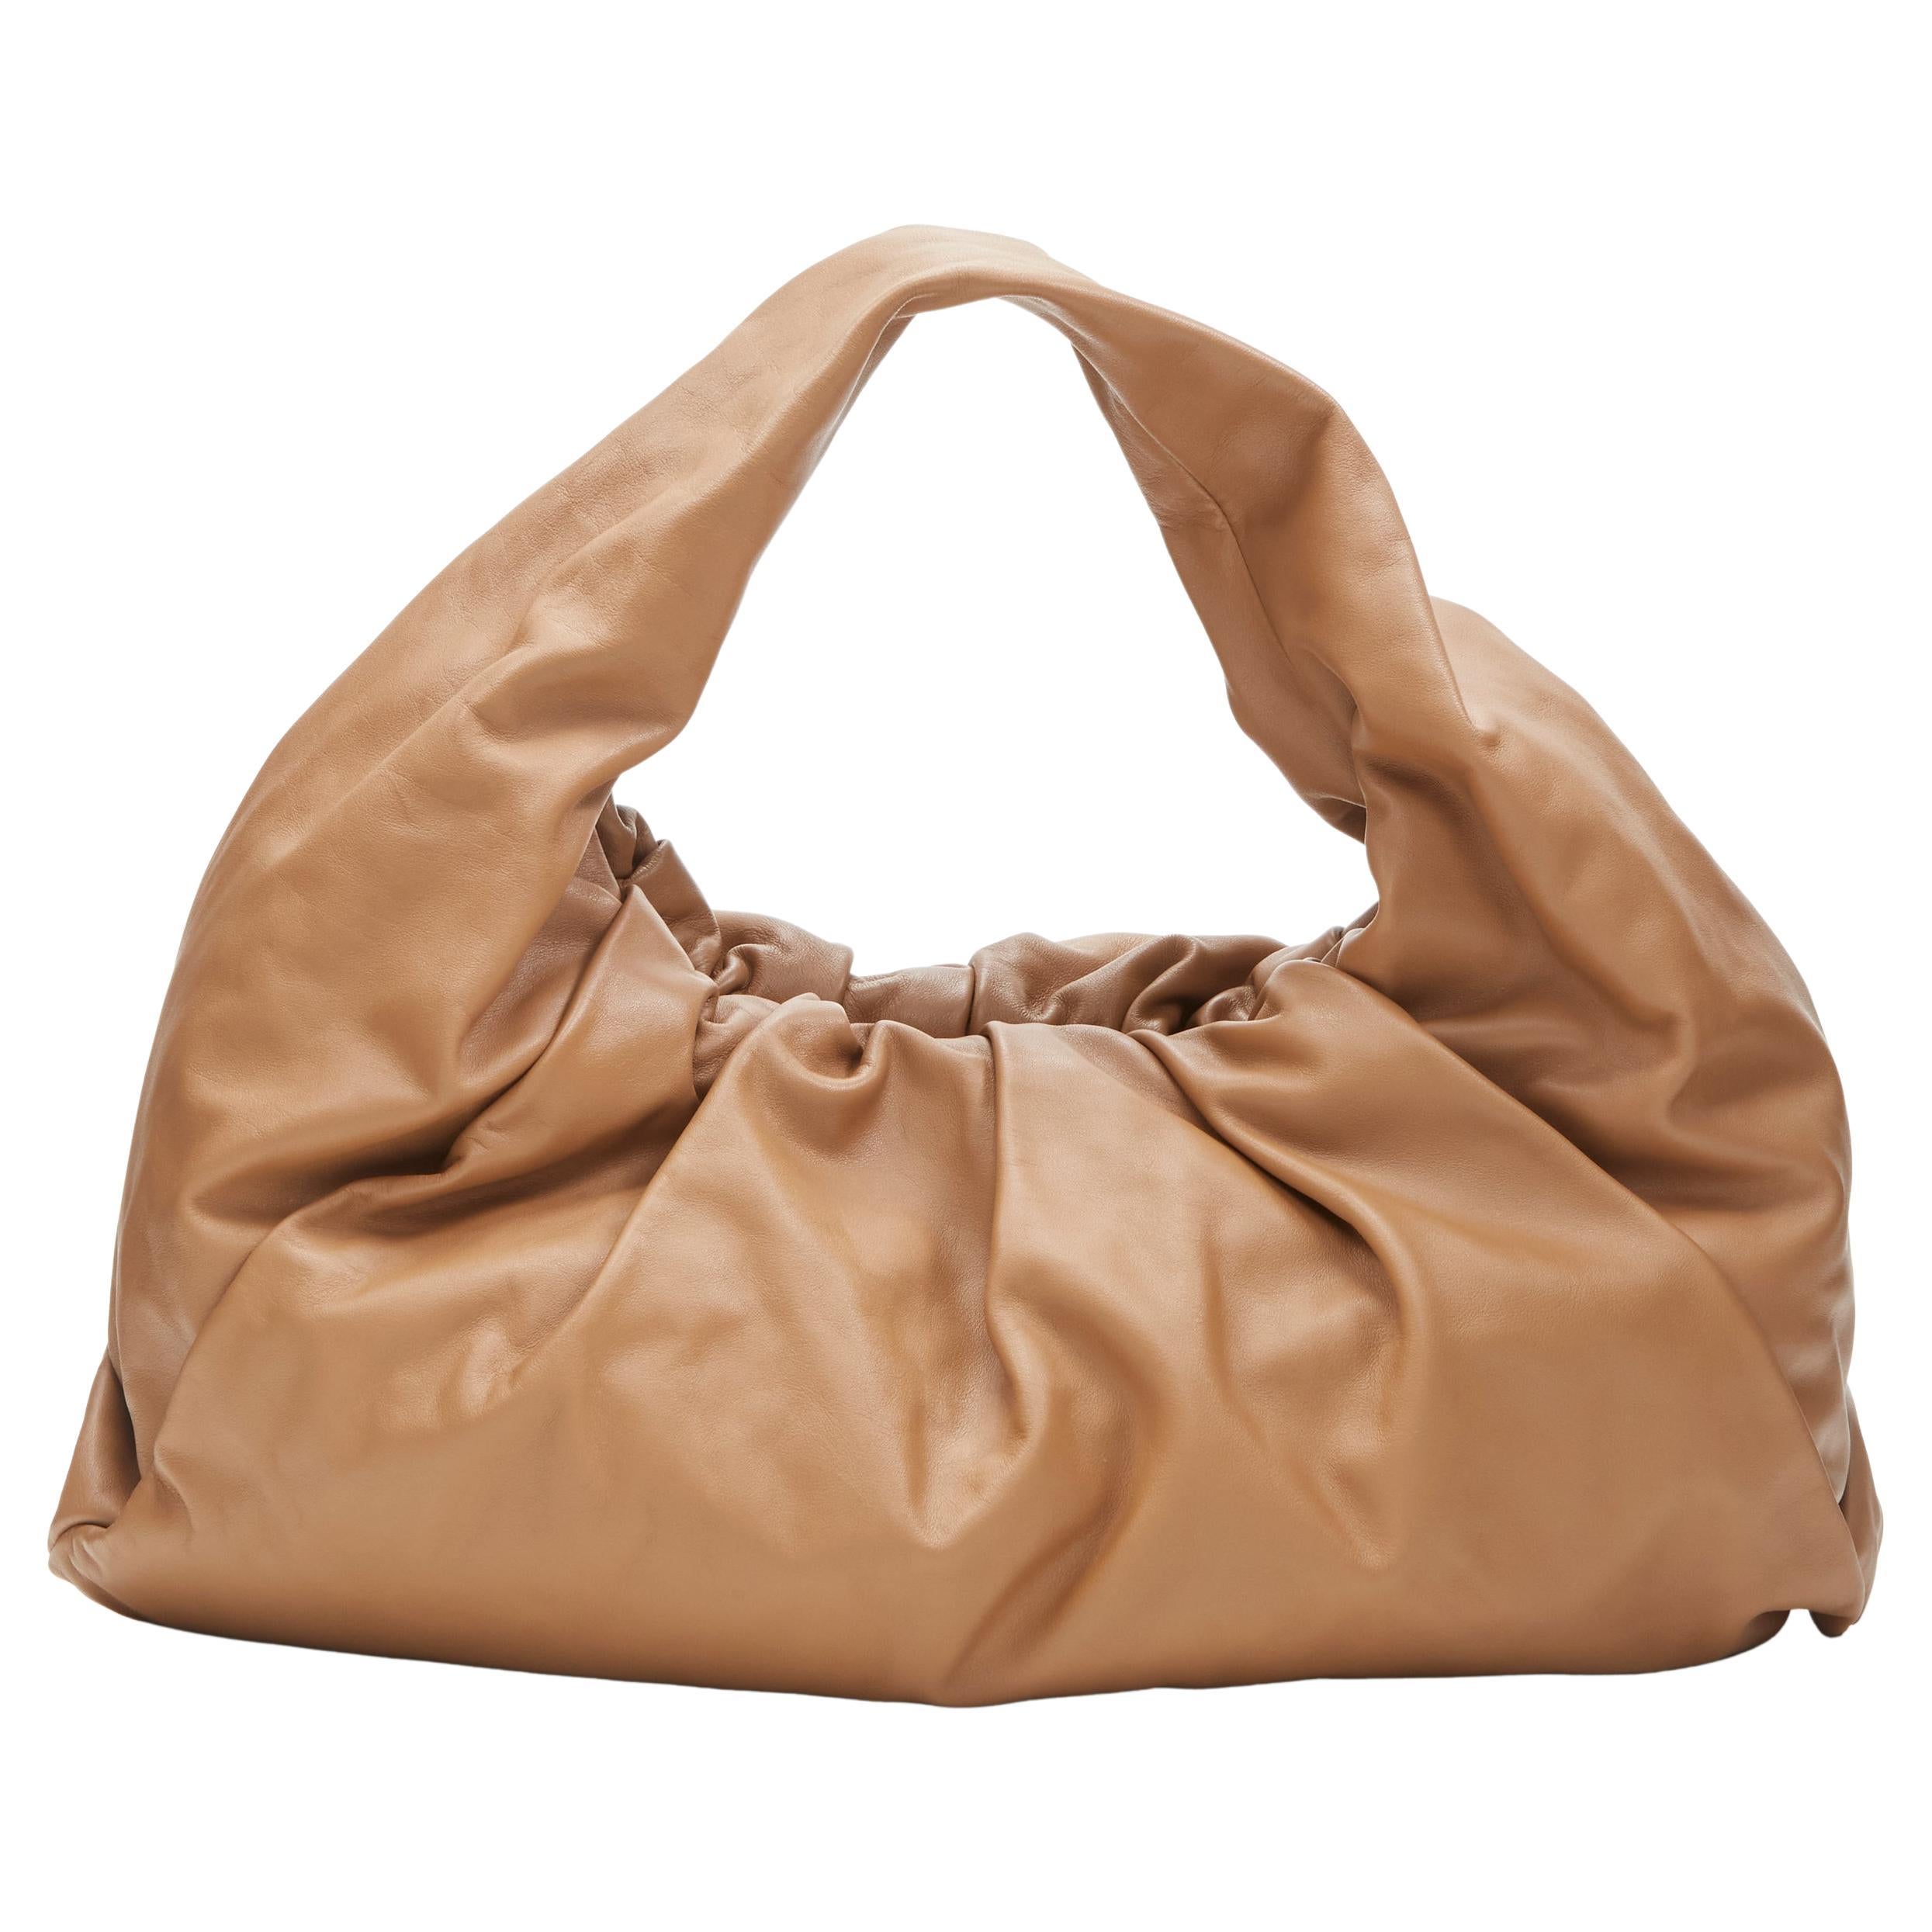 BOTTEGA VENETA Daniel Lee The Shoulder Pouch brown leather gathered hobo bag For Sale